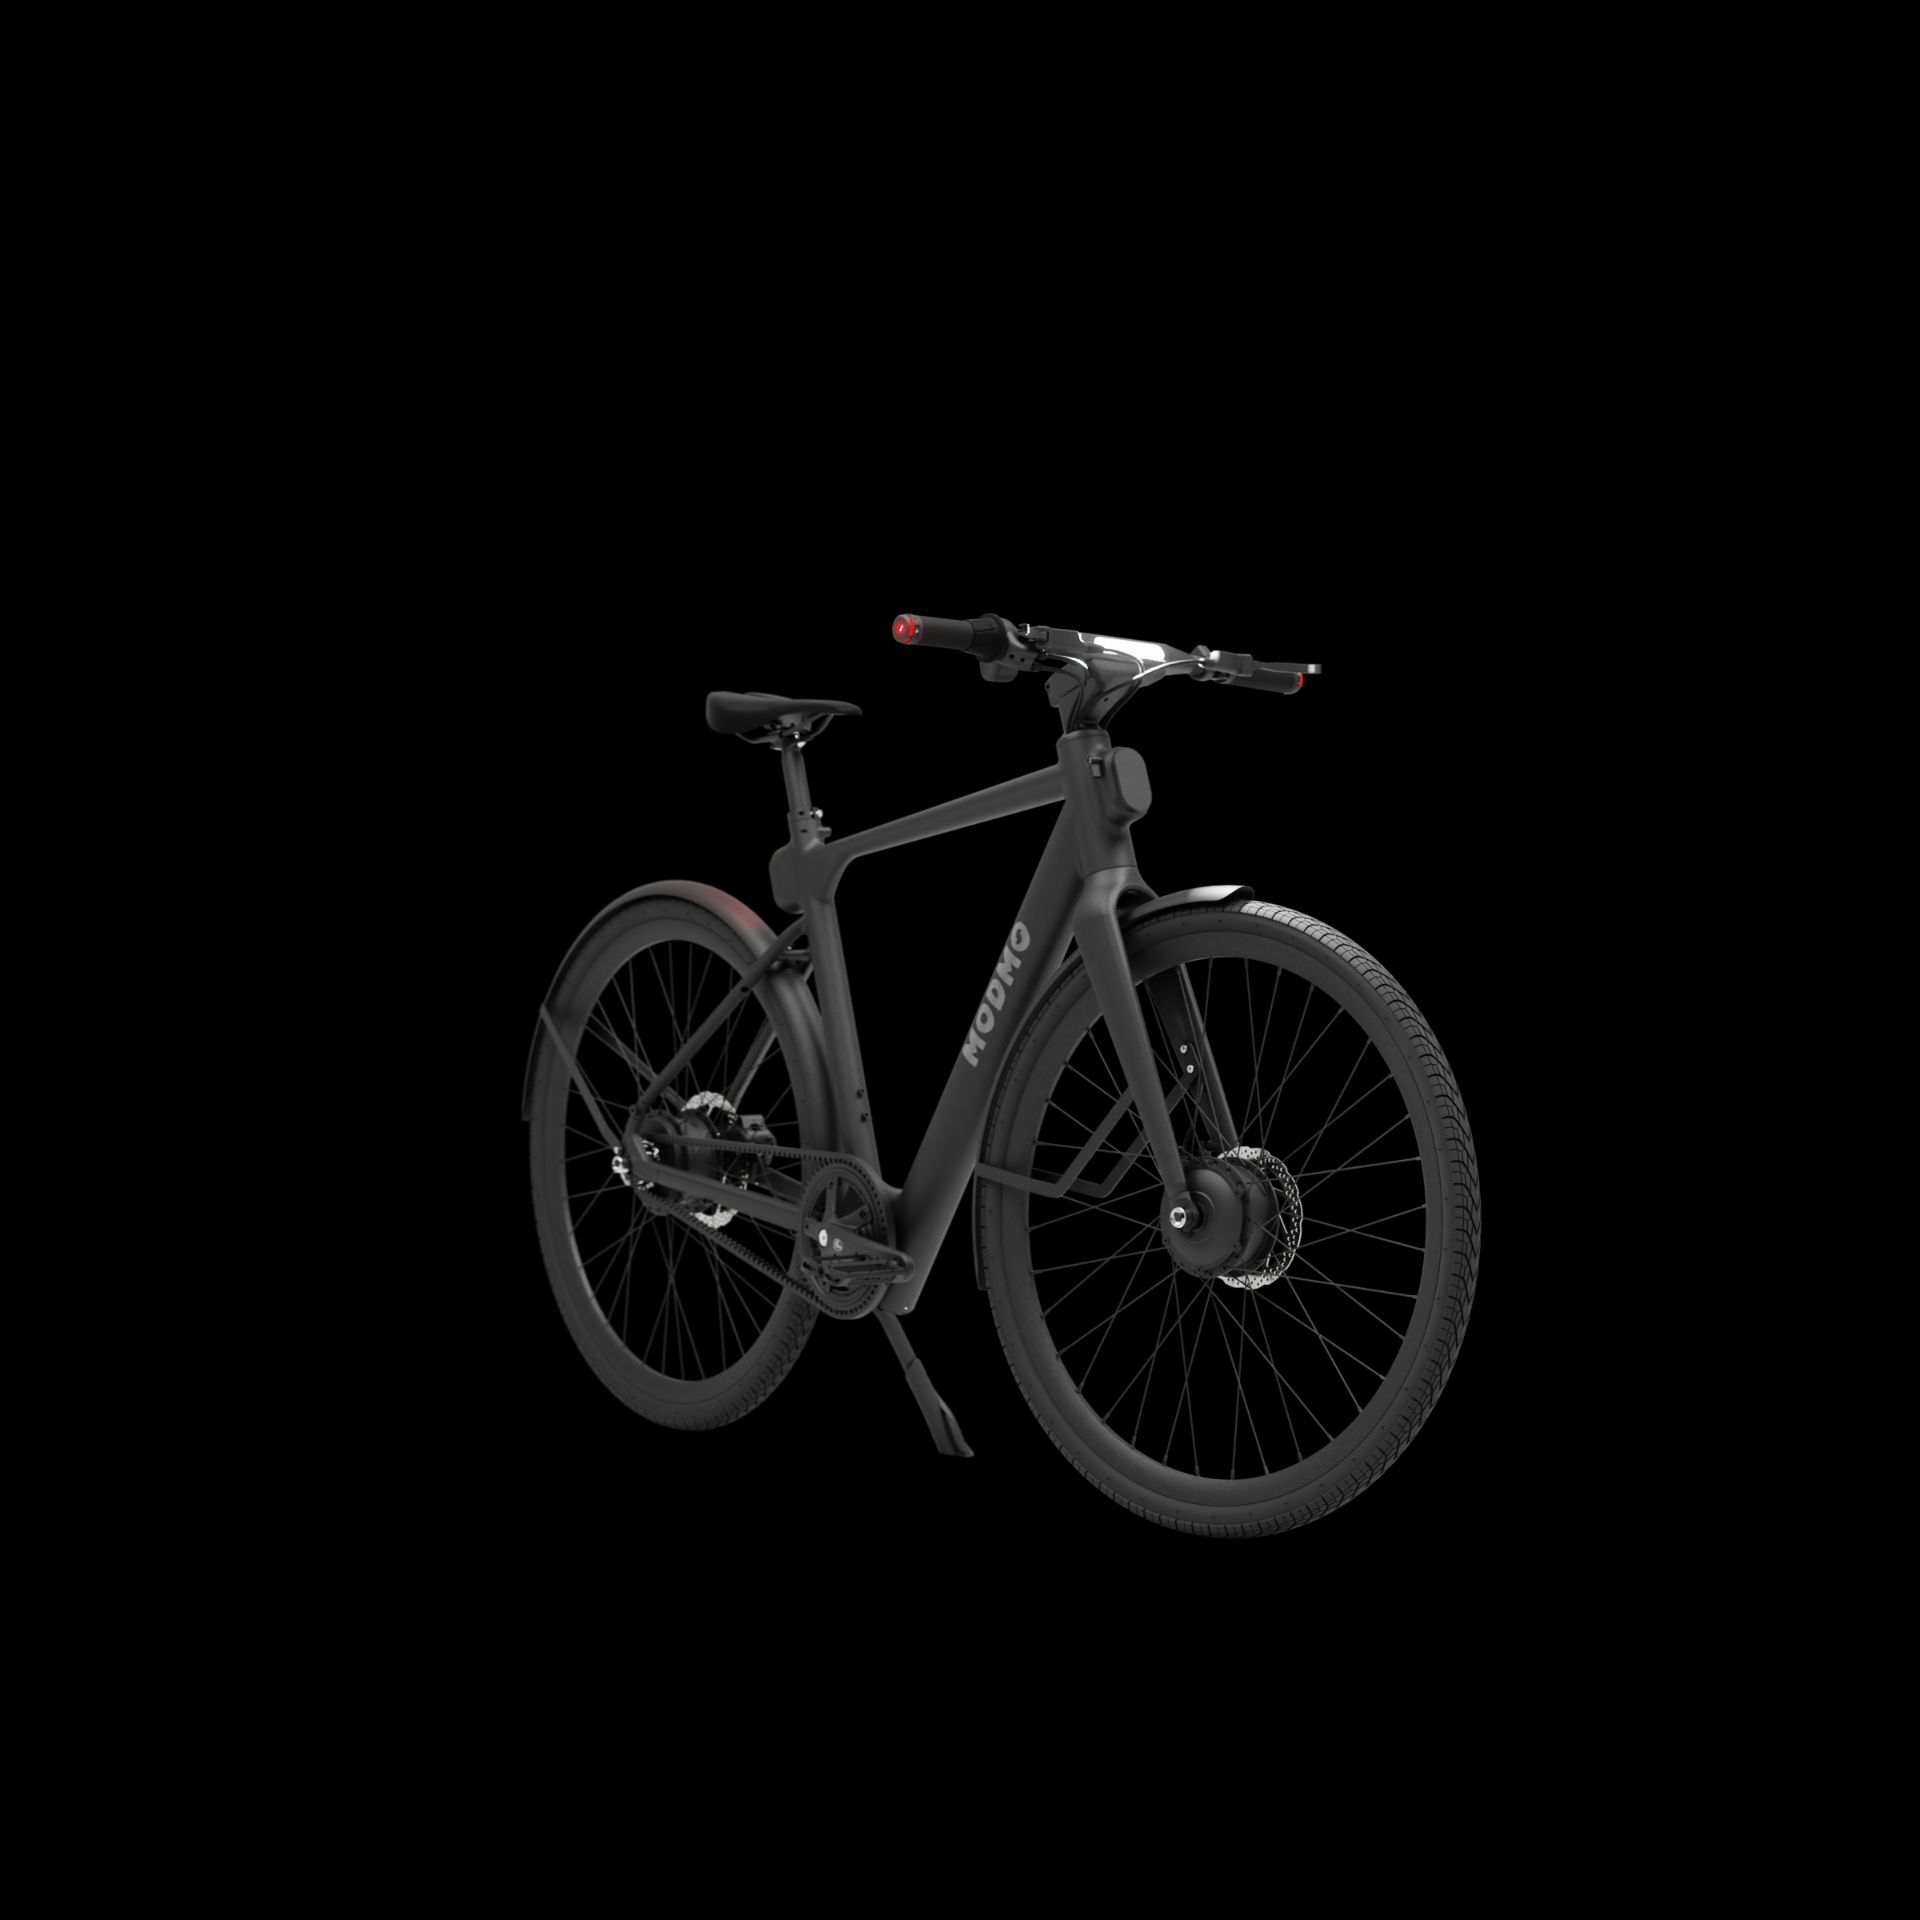 Modmo Saigon+ Electric Bicycle - RRP £2800 - Size M (Rider: 155-175cm) - Image 3 of 19